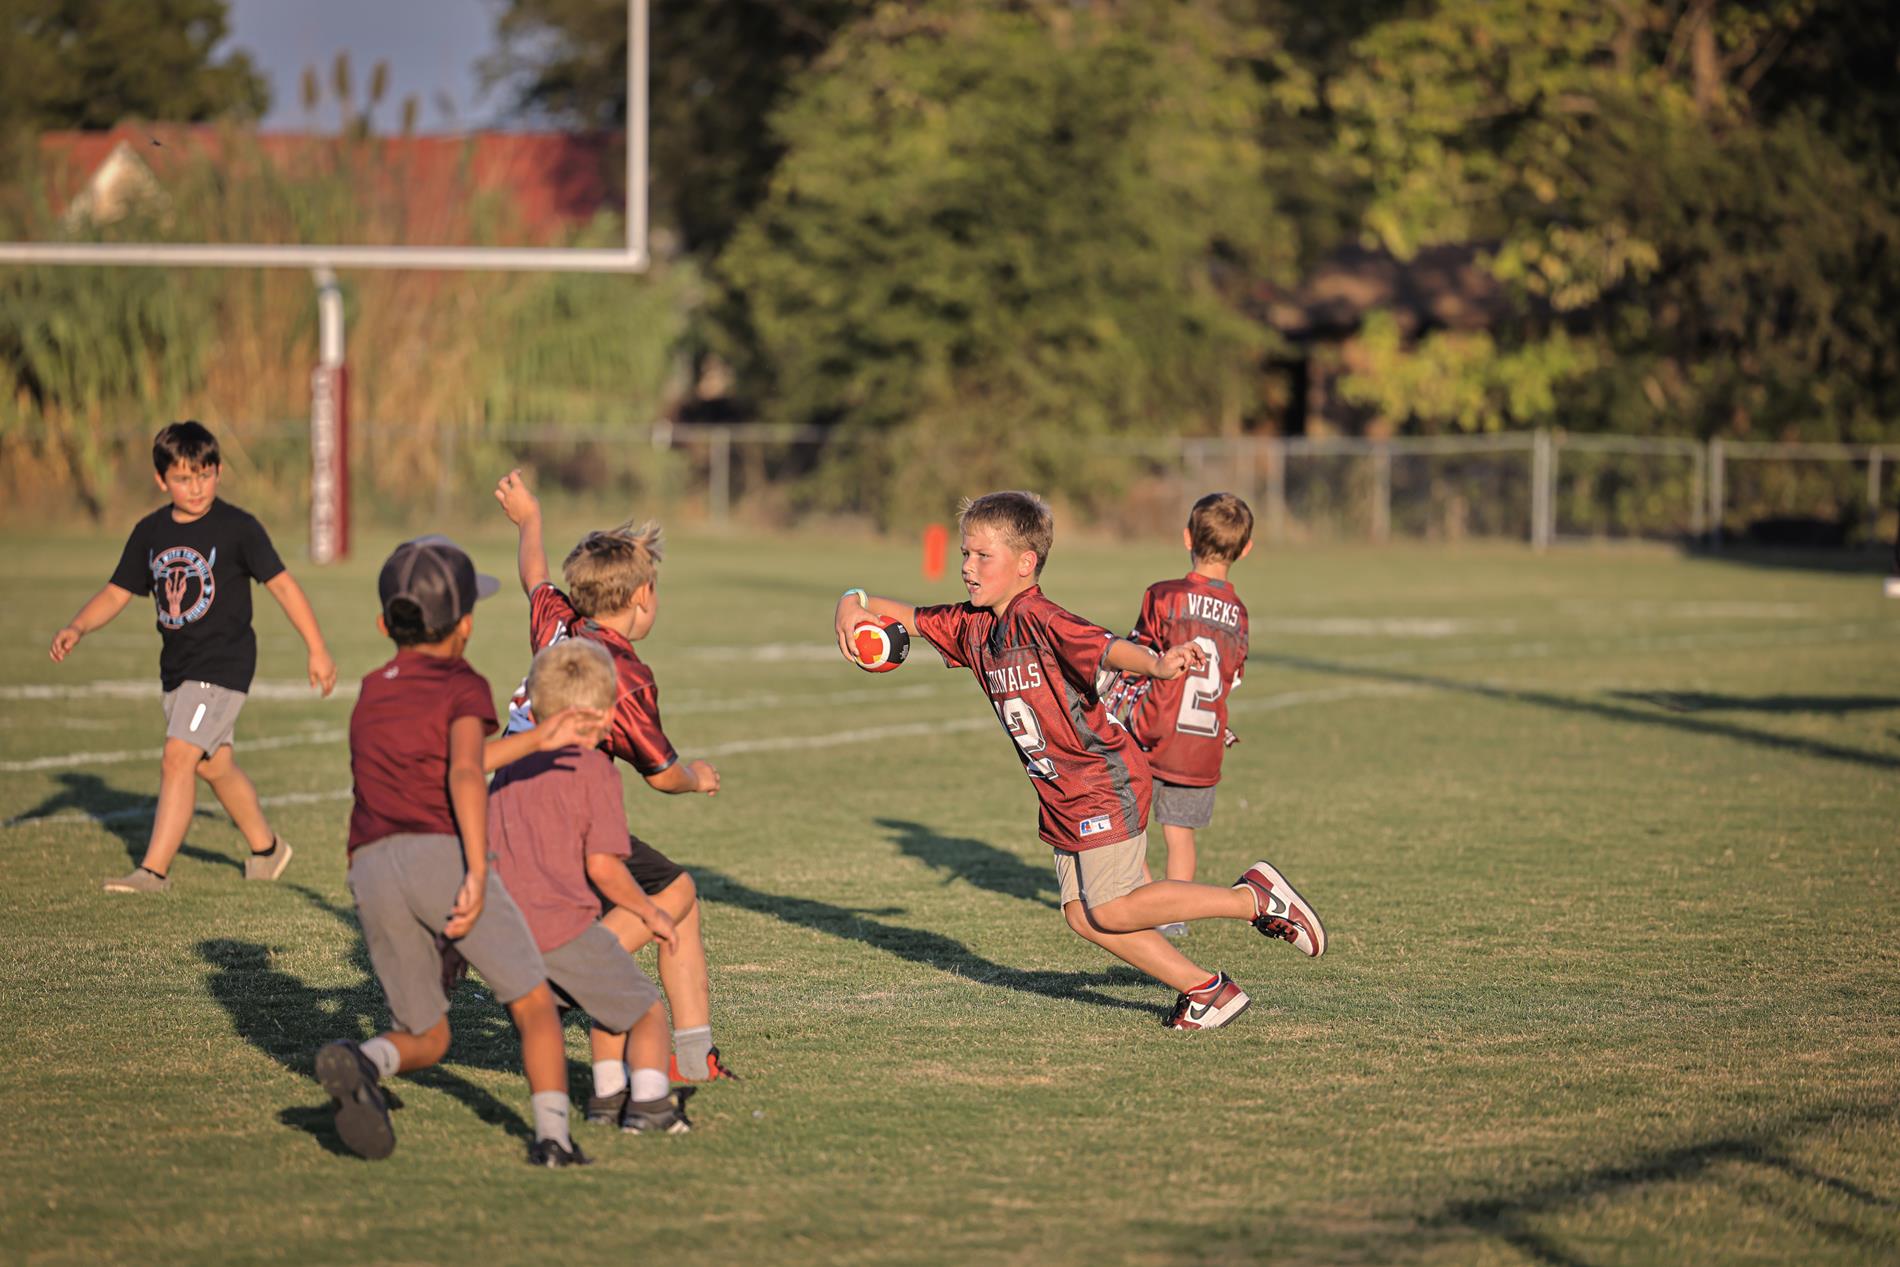 Kids playing football